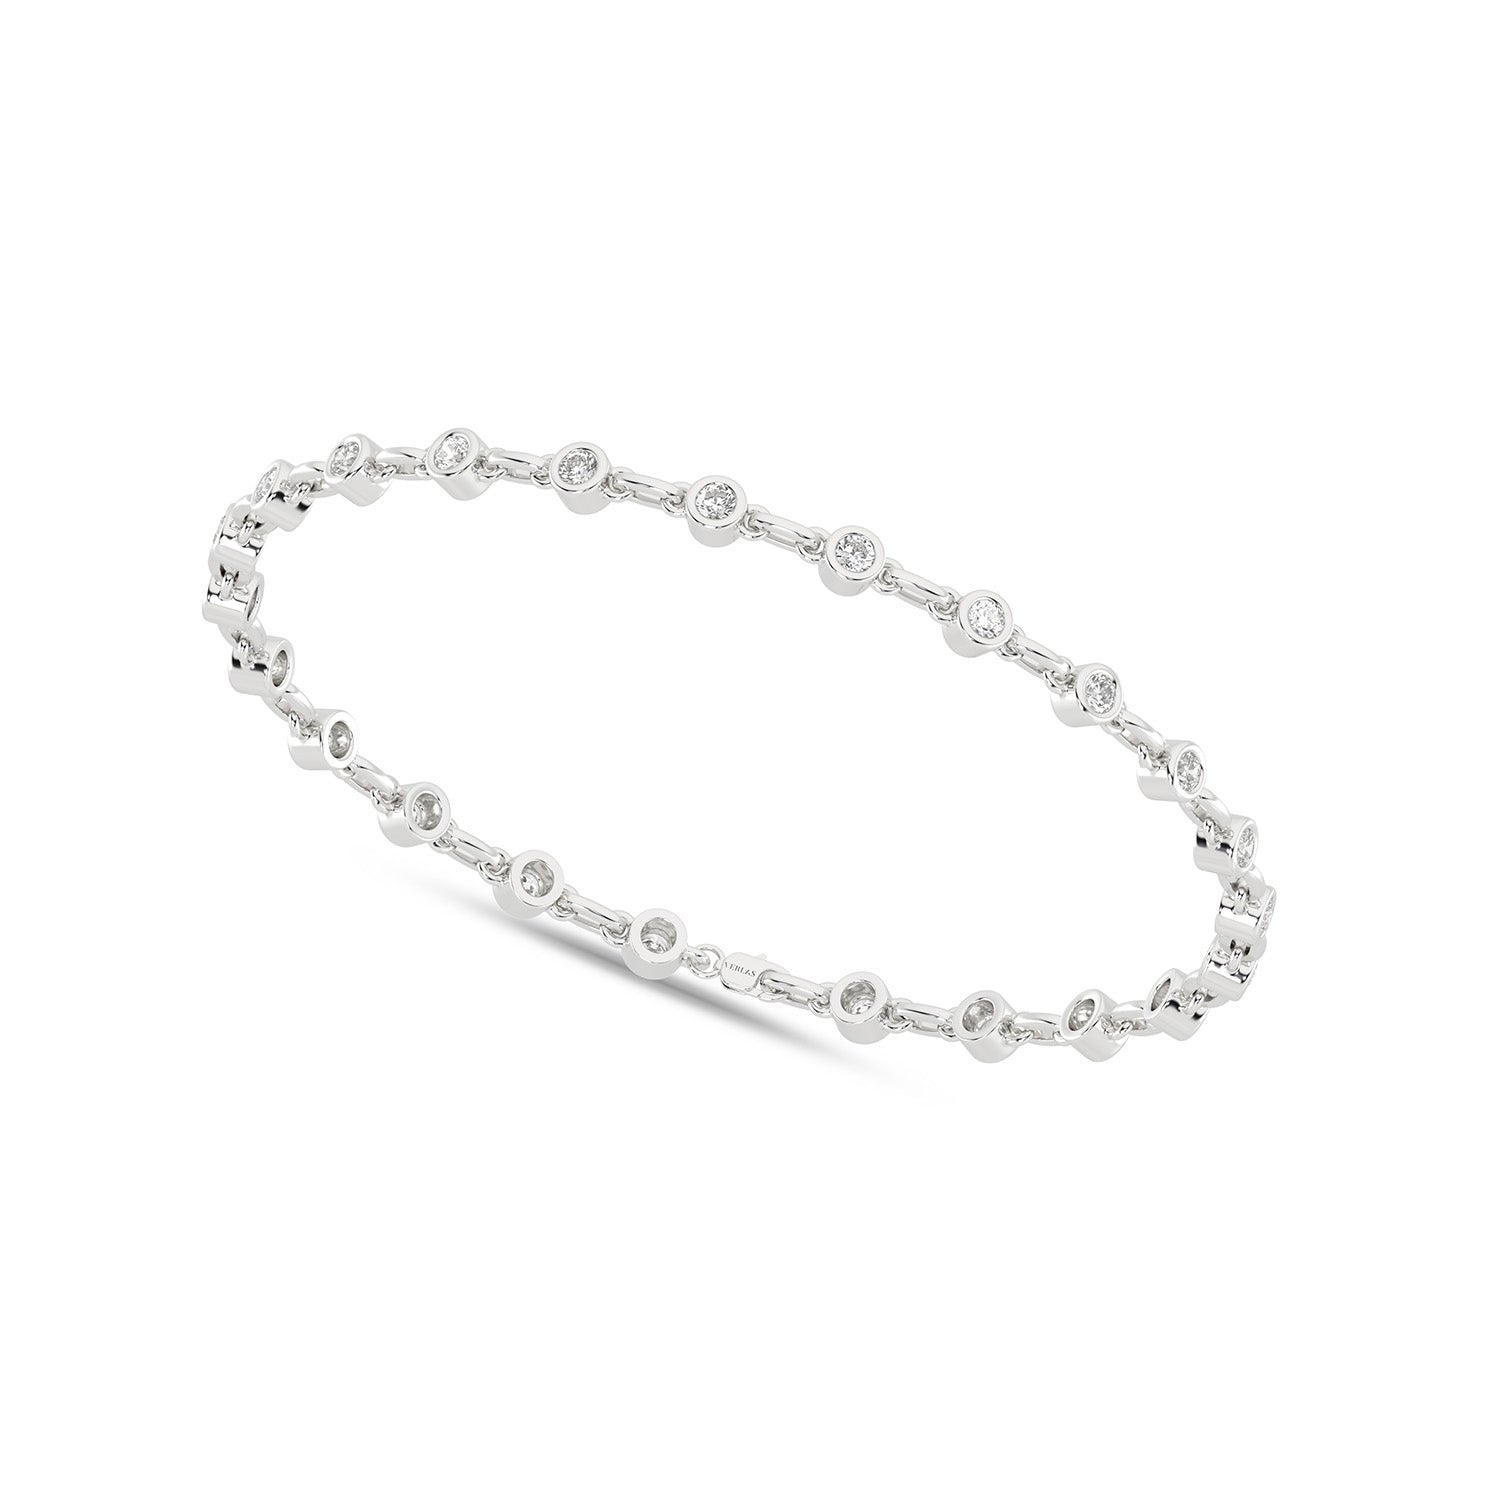 Atmos Bezel Set Diamond Bracelet_Product Angle_1/2 - 1